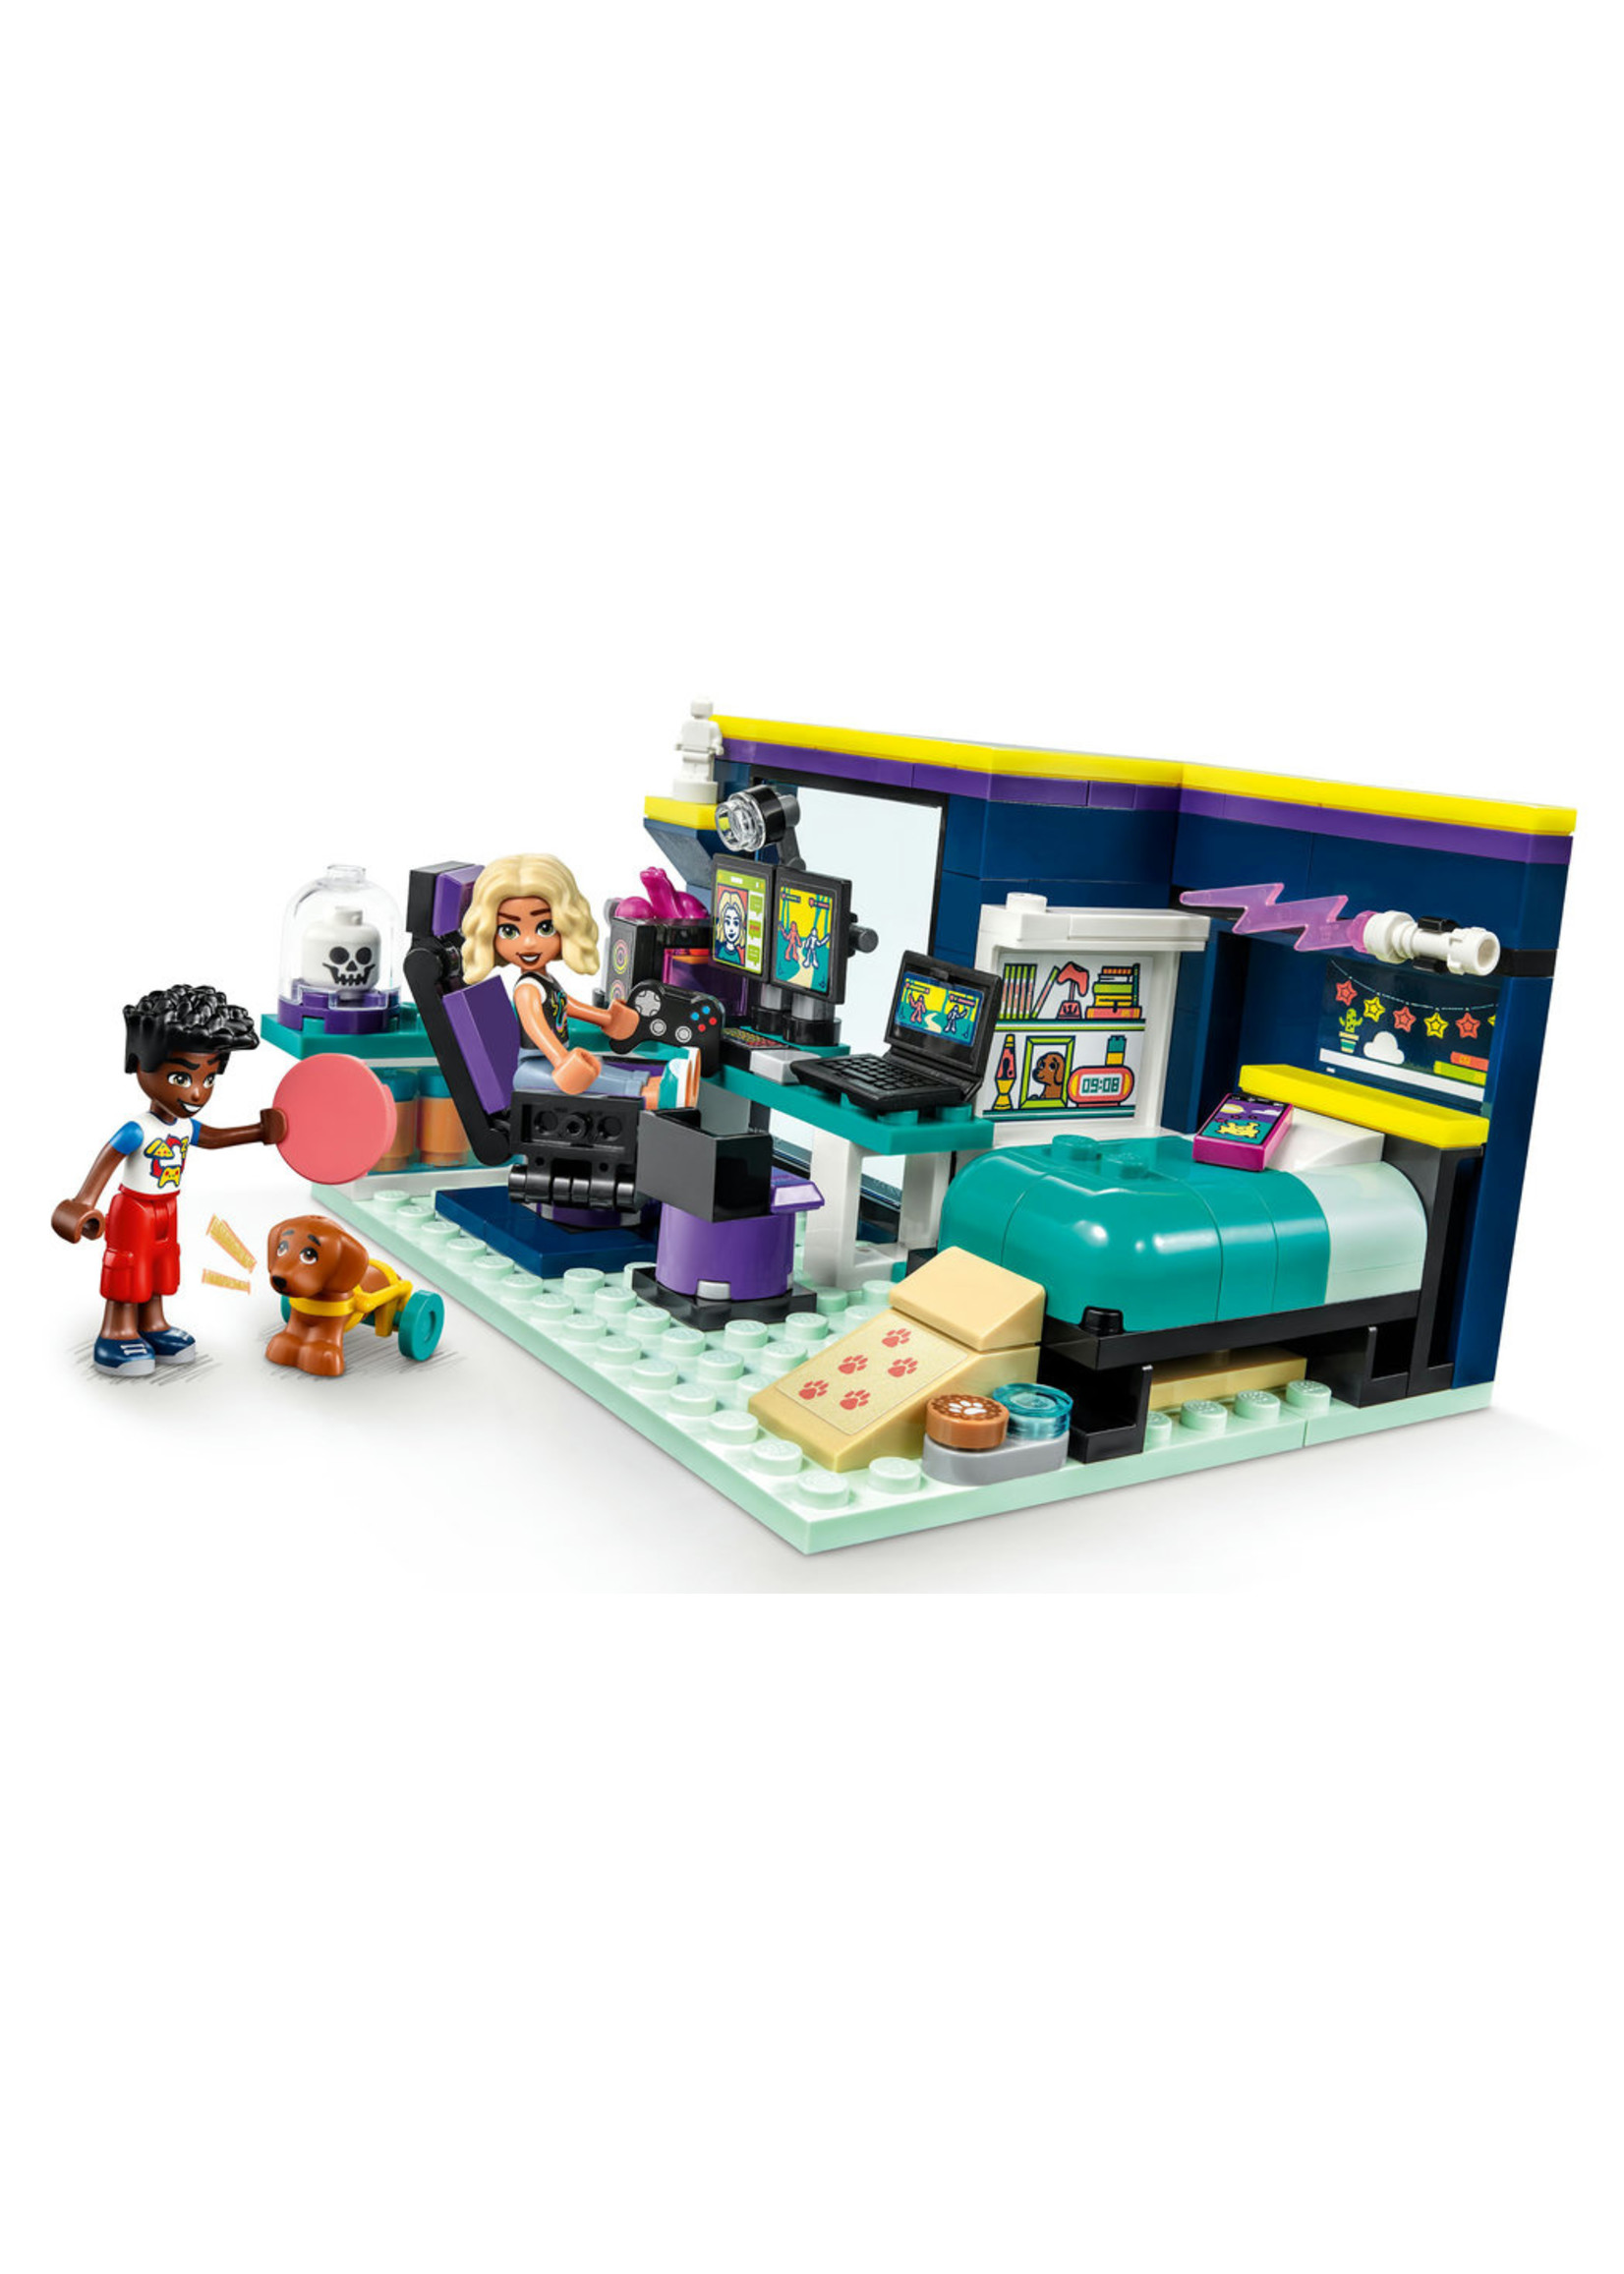 LEGO 41755 - Nova's Room